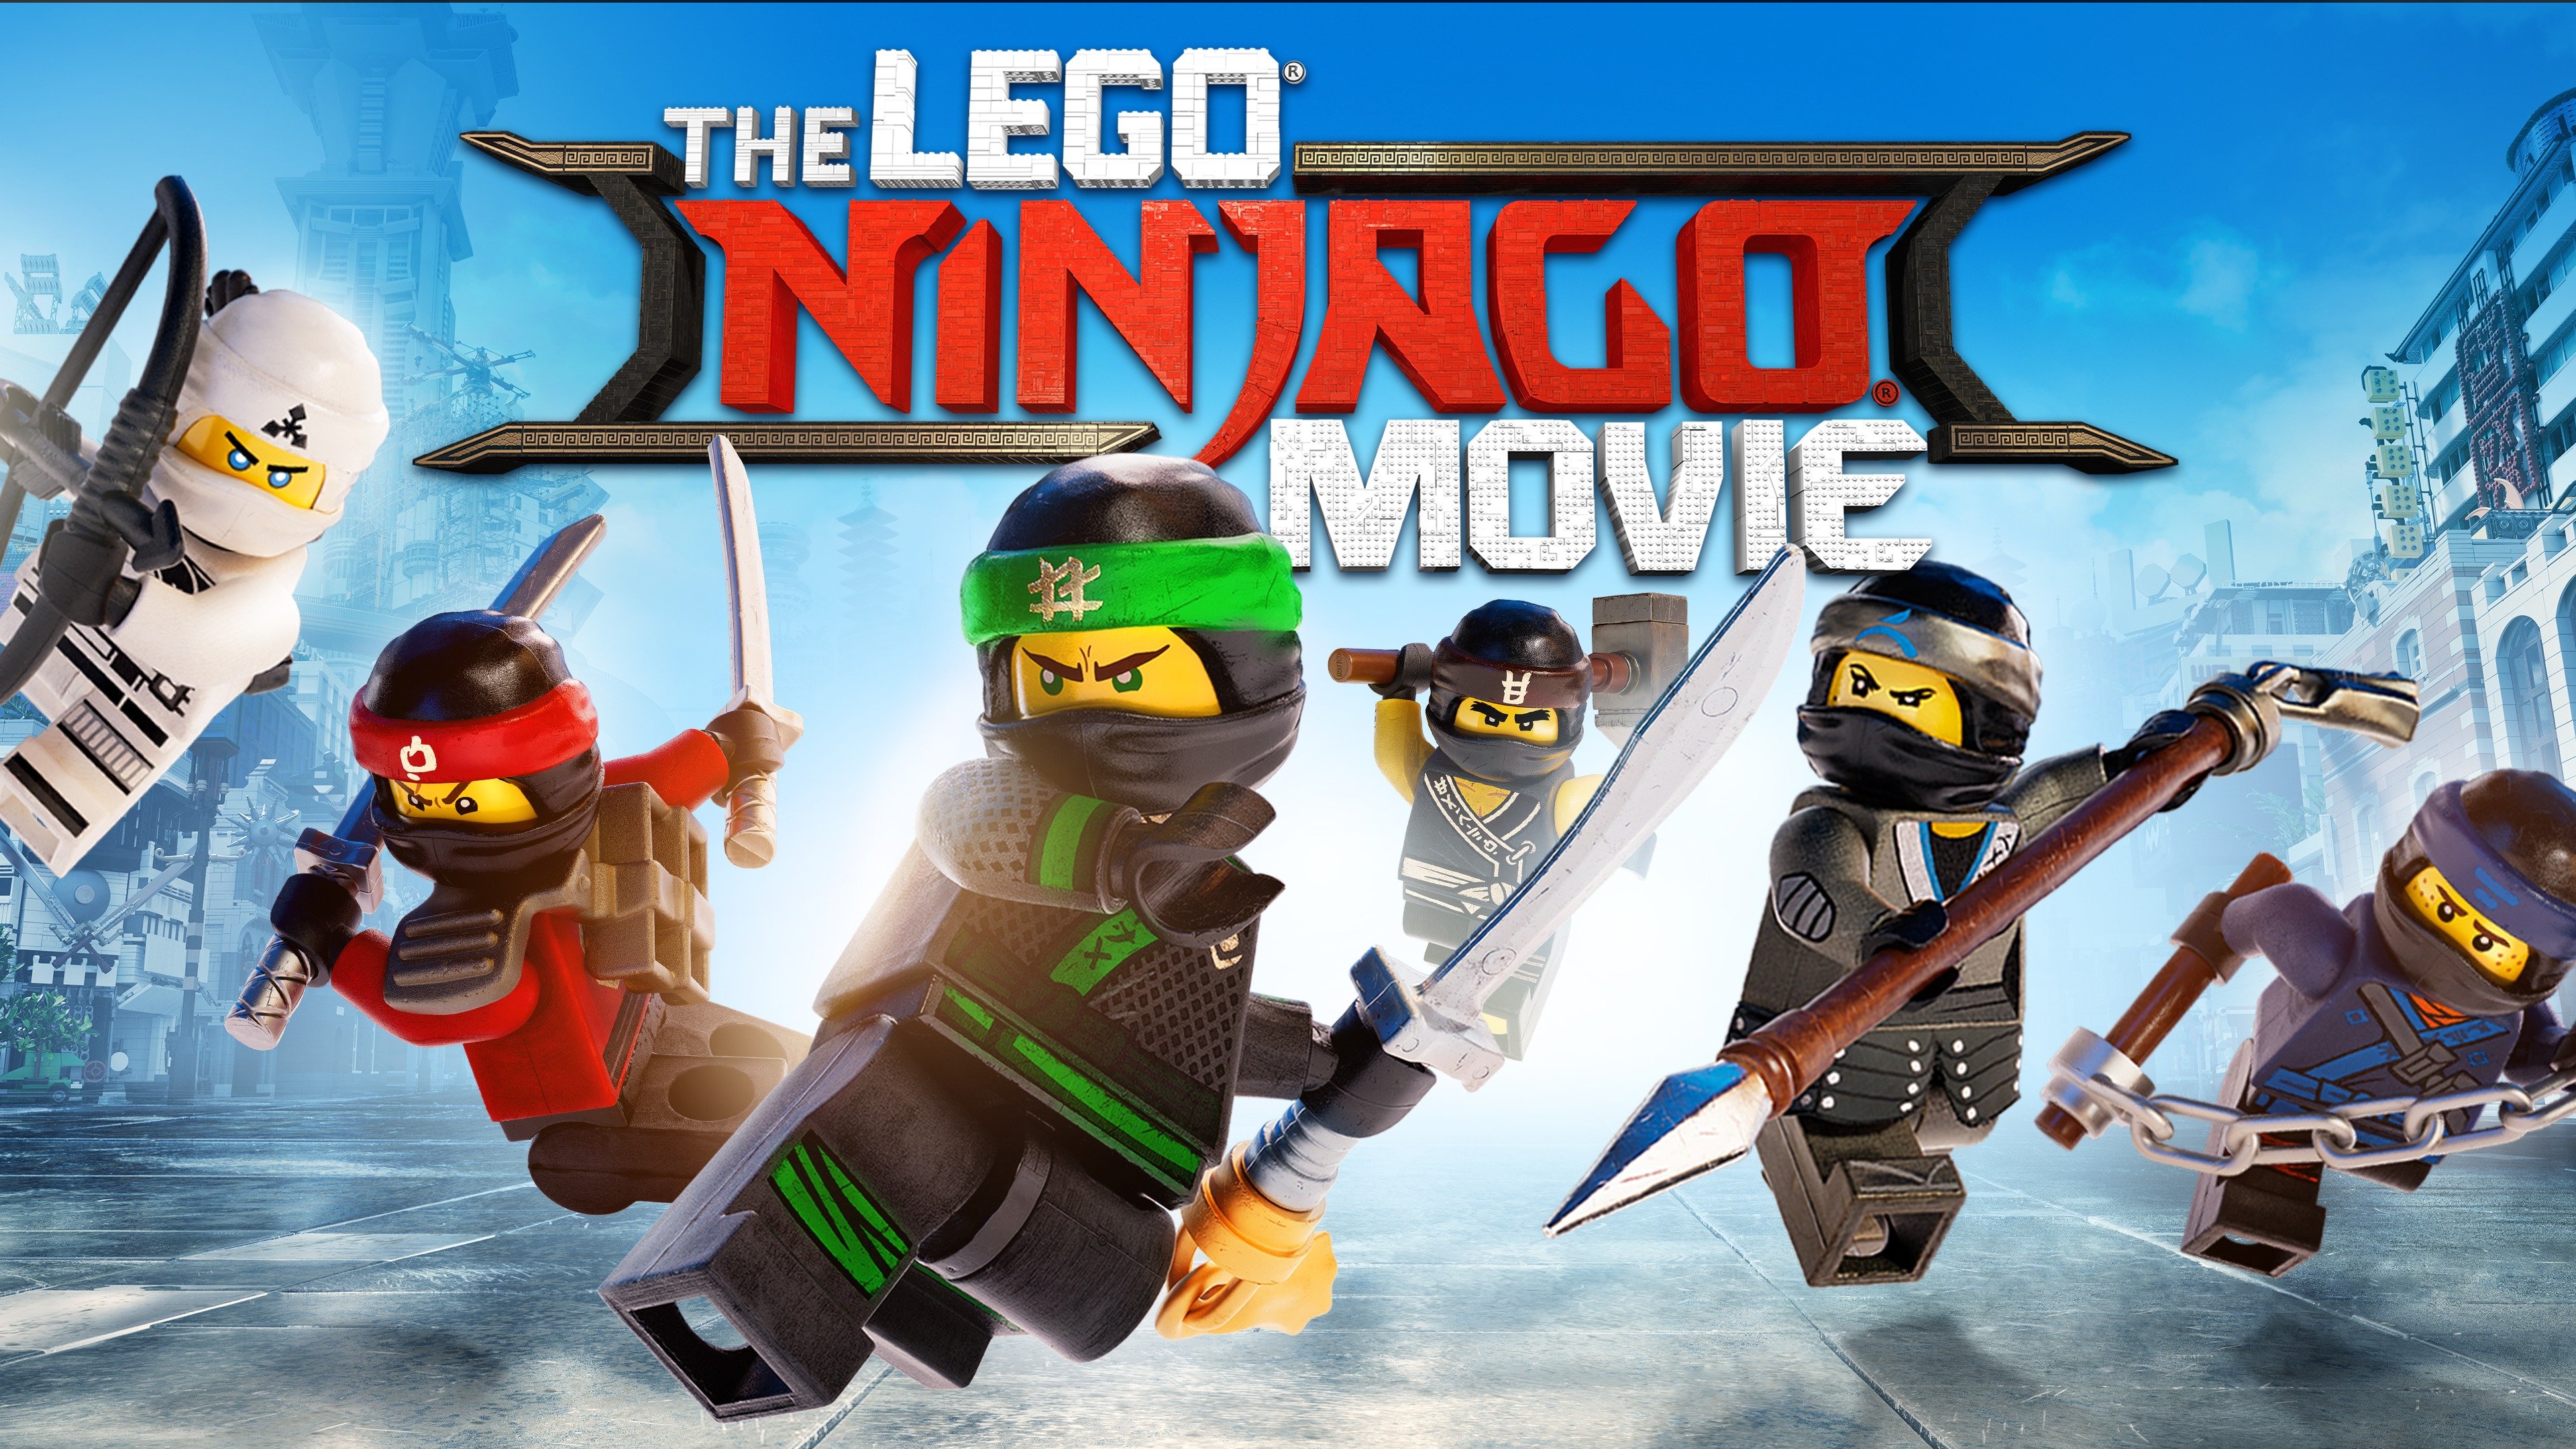 The Lego Ninjago Movie Comic Con Trailer Trailers And Videos Rotten Tomatoes